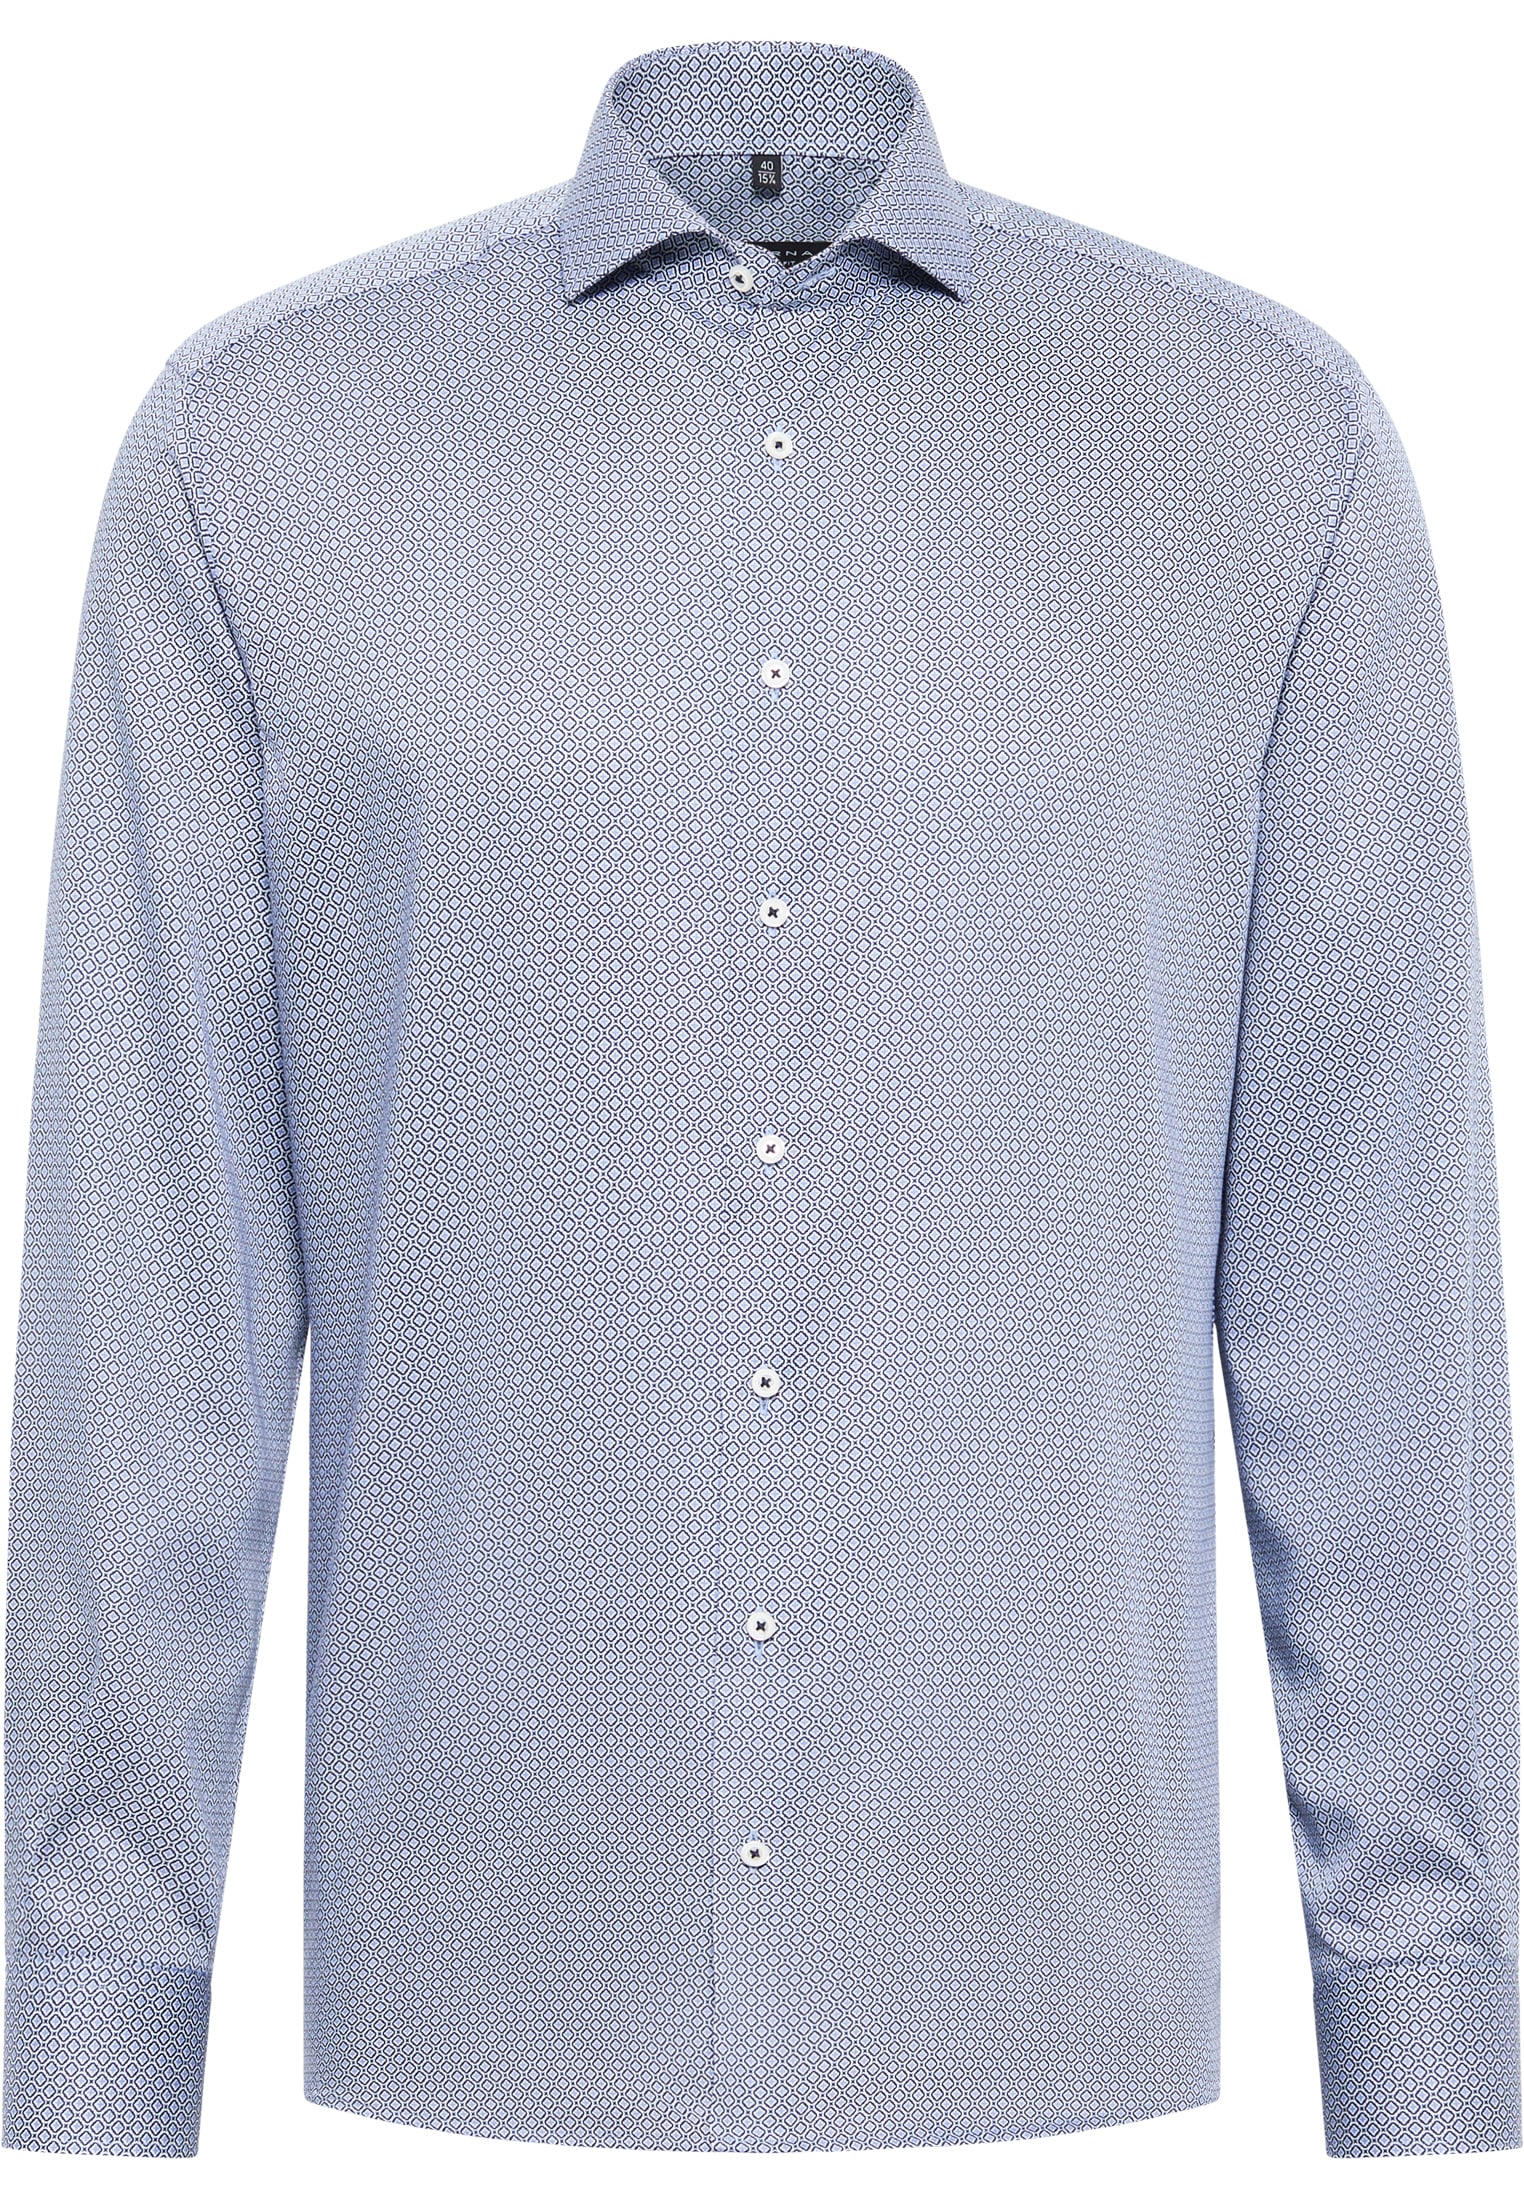 MODERN FIT Shirt in blue/light blue printed